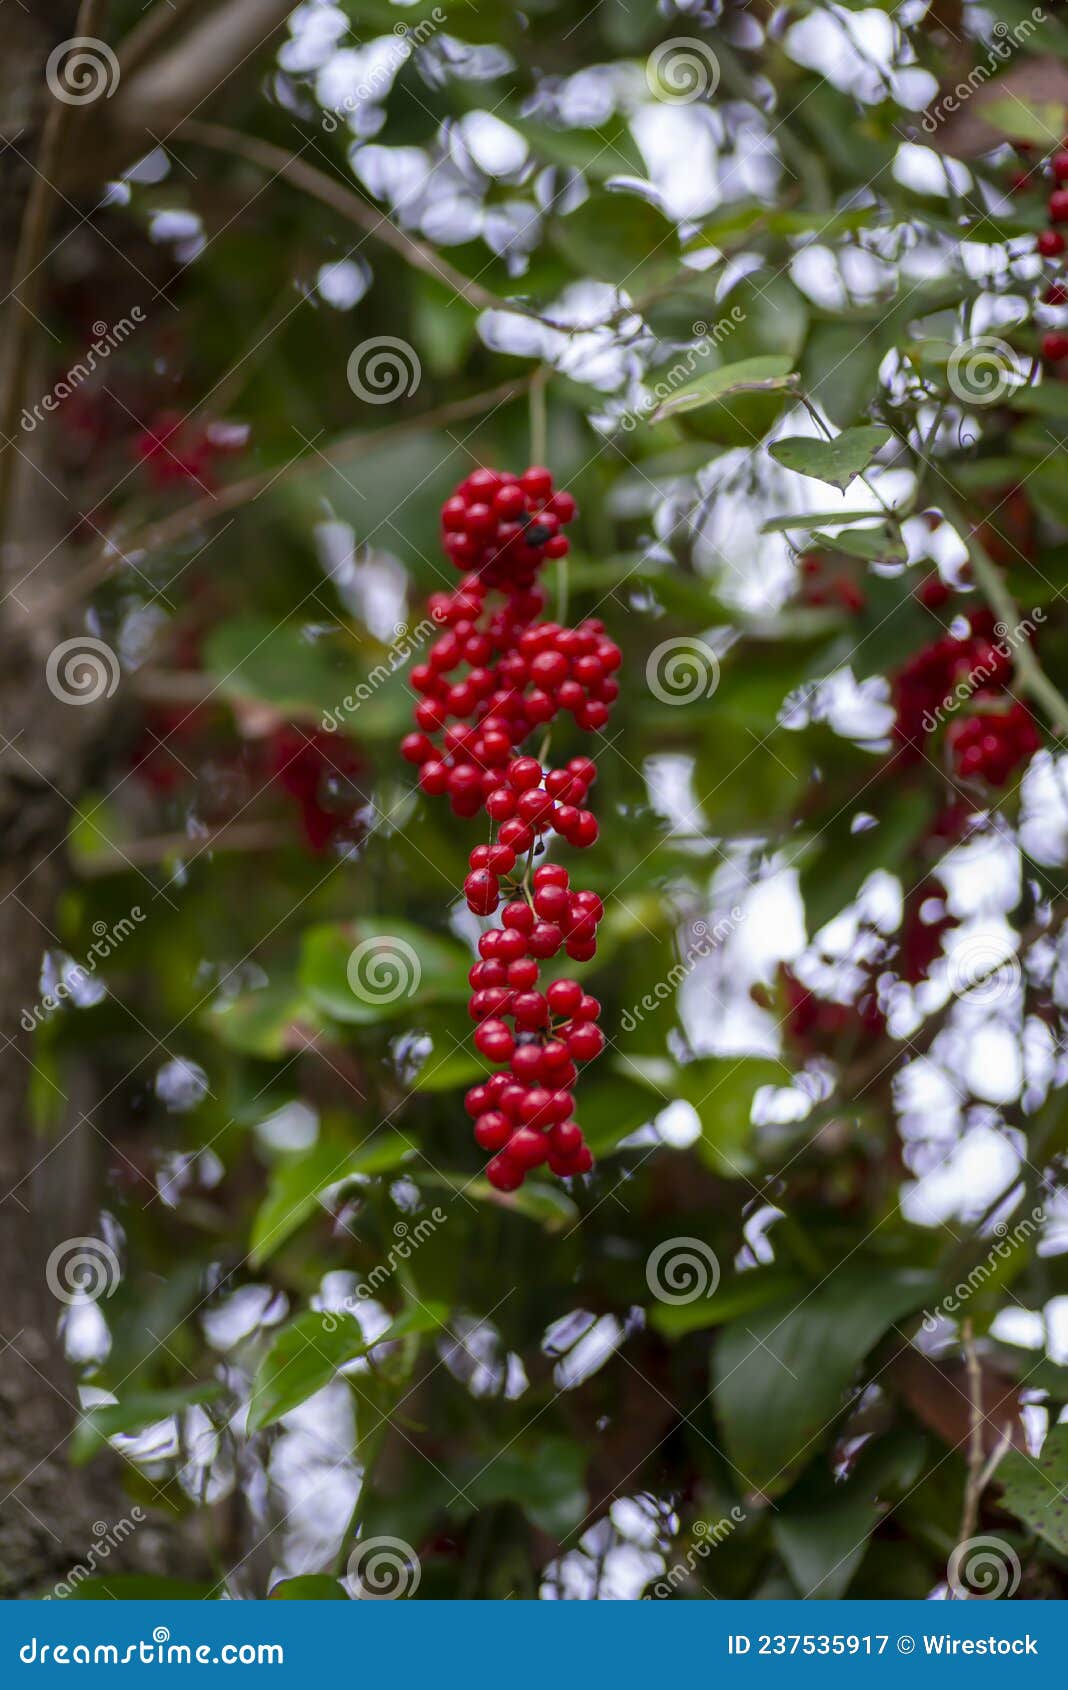 vertical shot of wild cluster berries born from a wild primavara plant